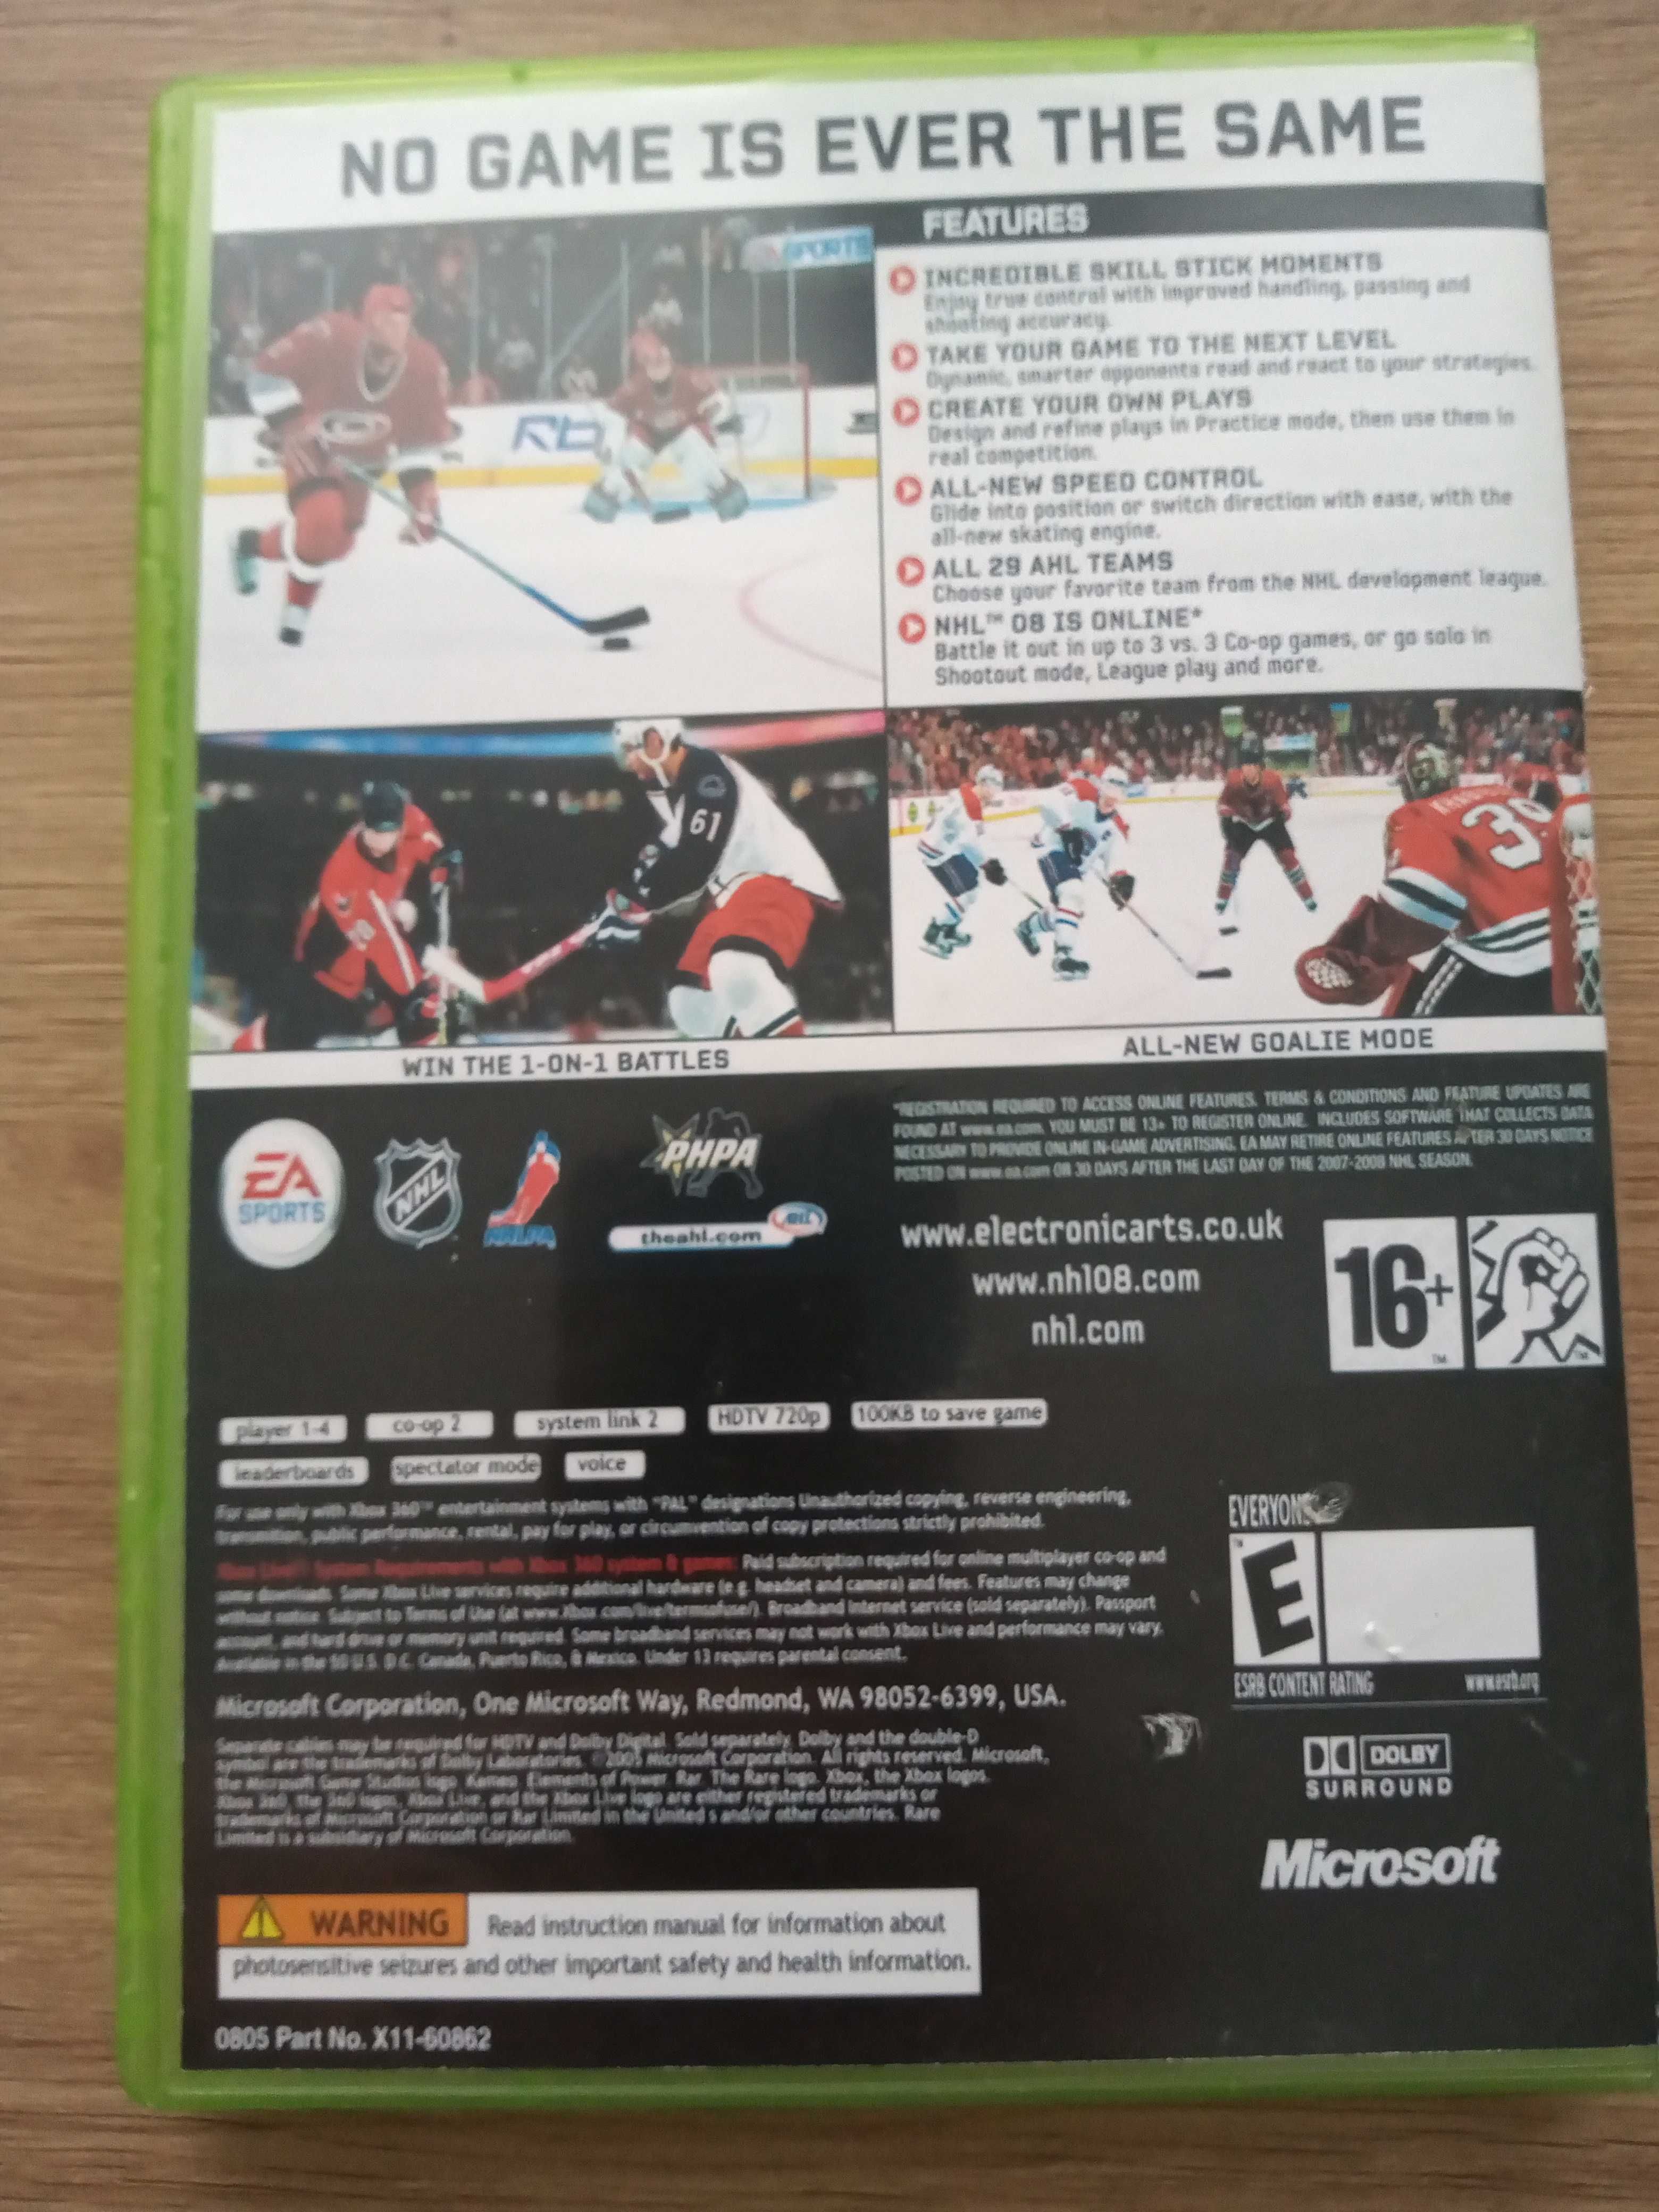 Gra NHL 08 XBOX 360